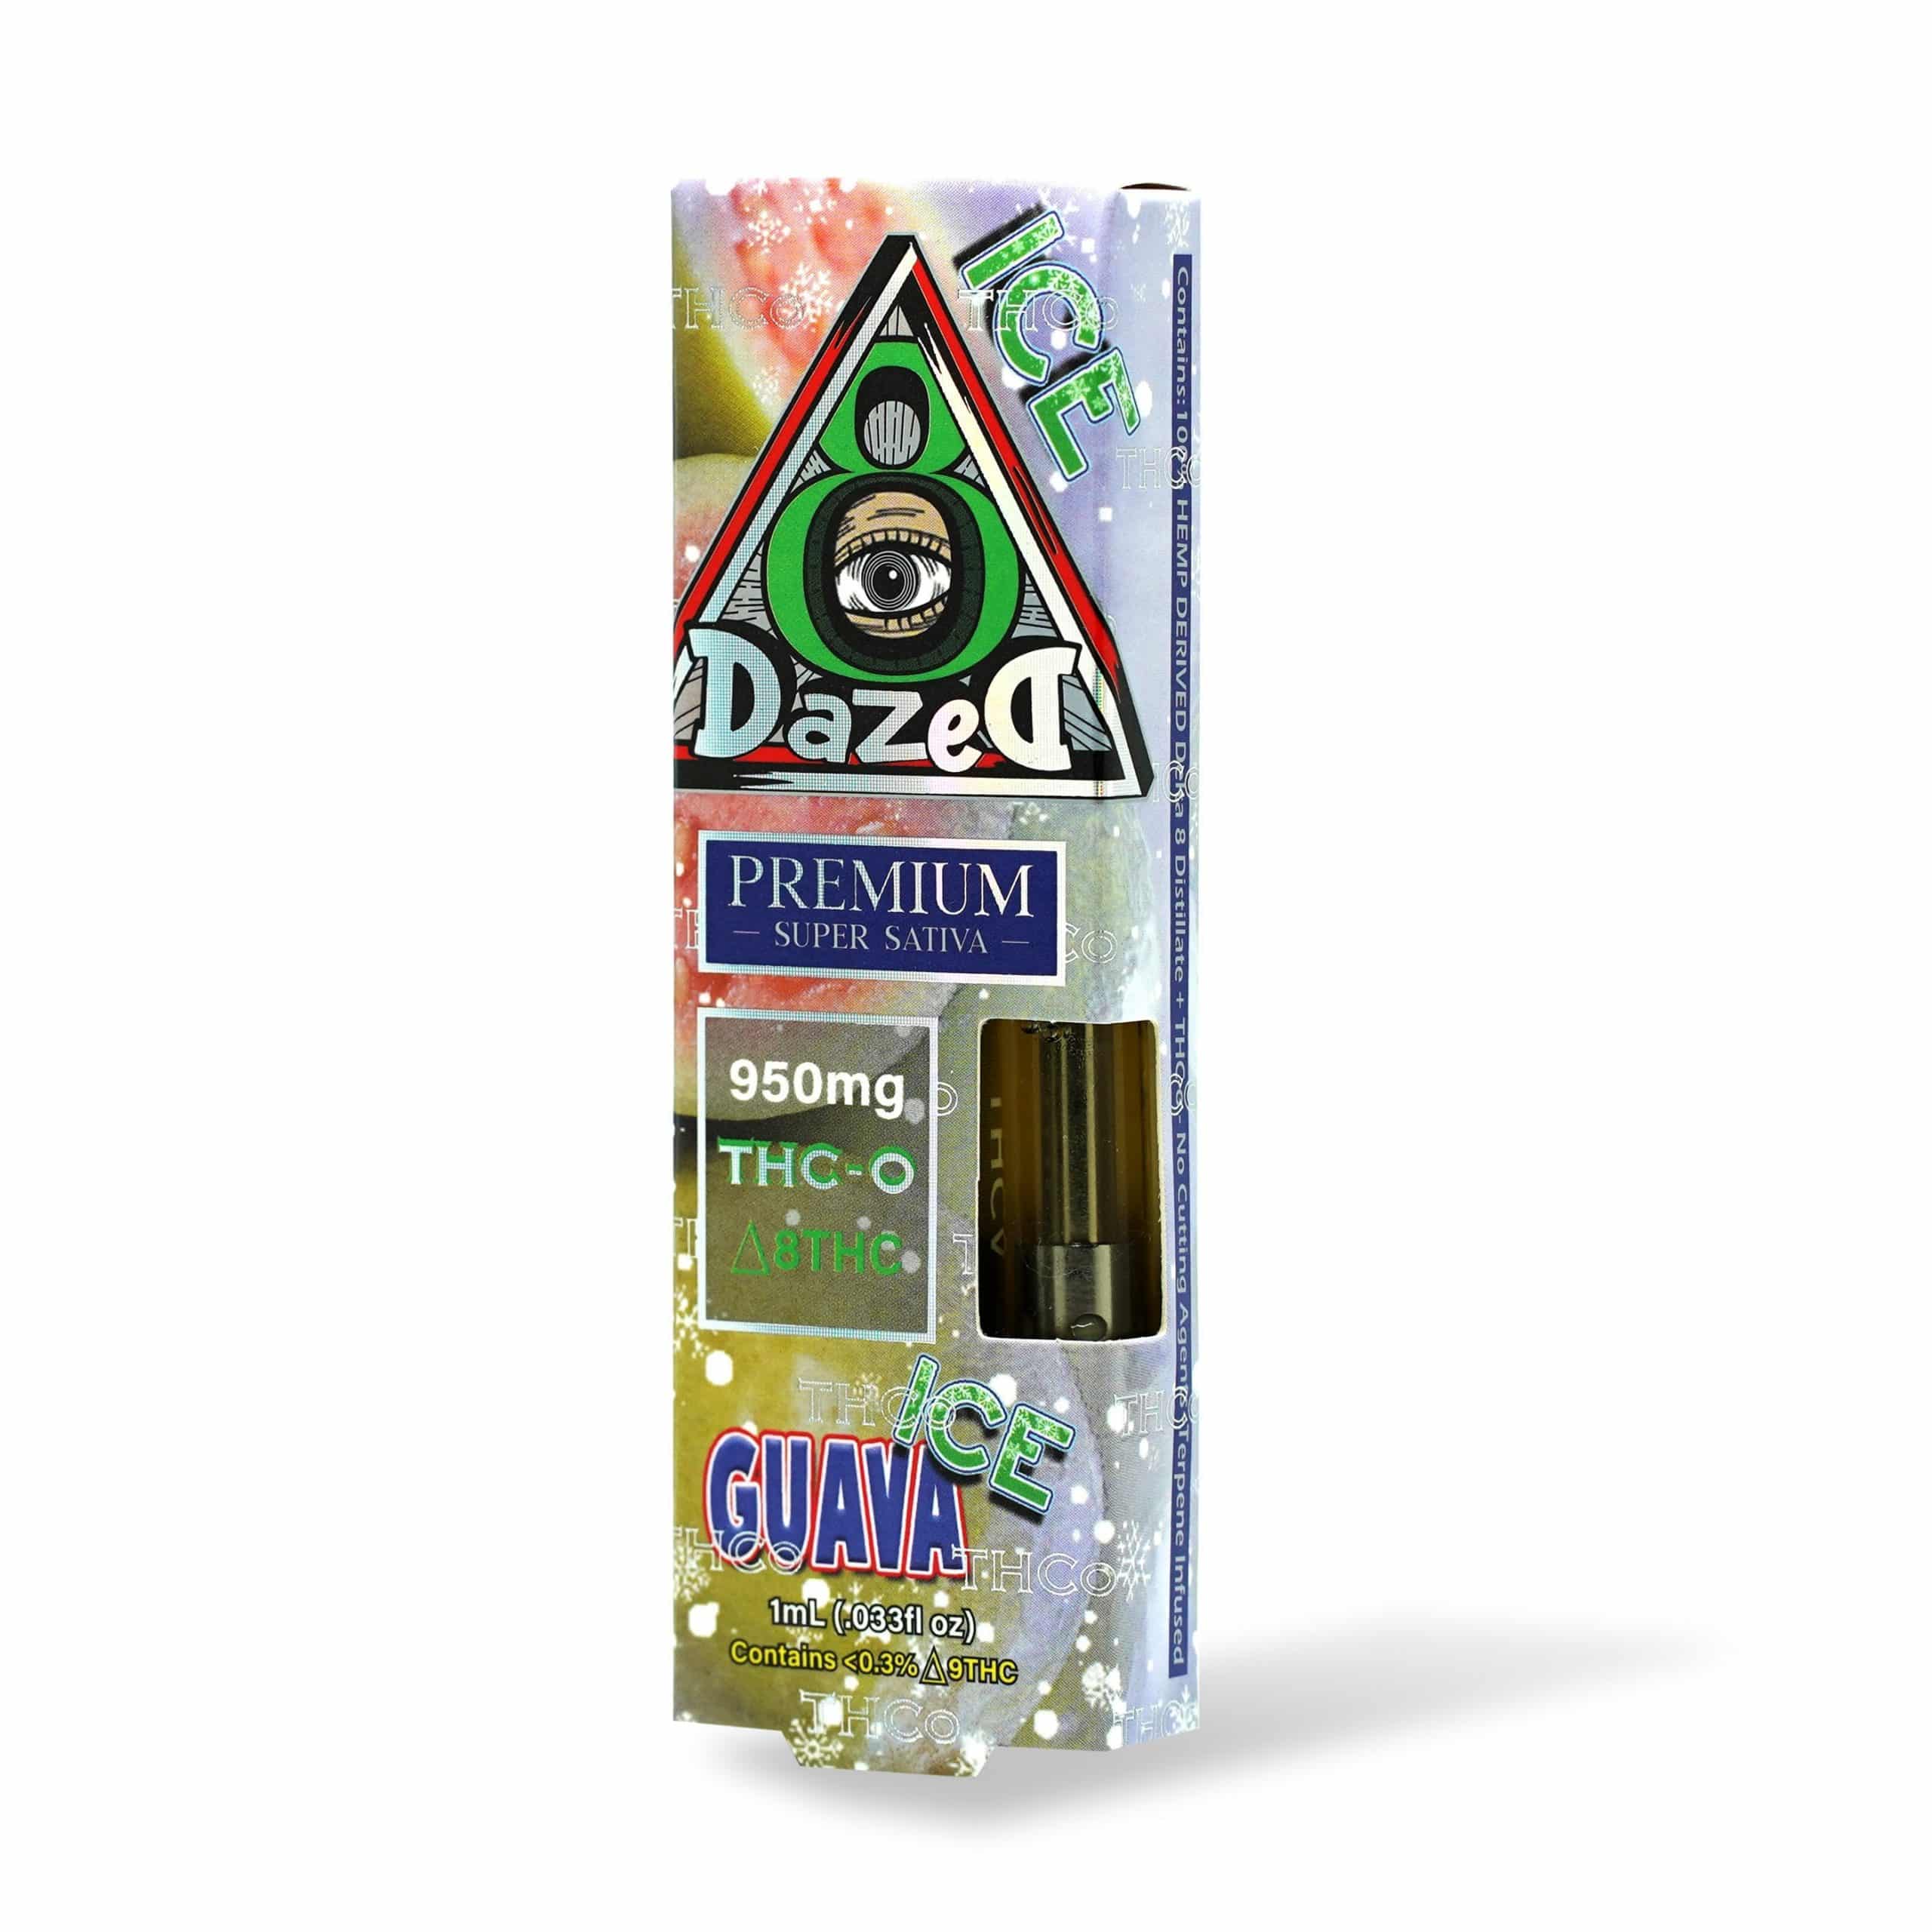 DazeD8 Guava Ice Delta 8 THC-O Cartridge (1g) Best Price